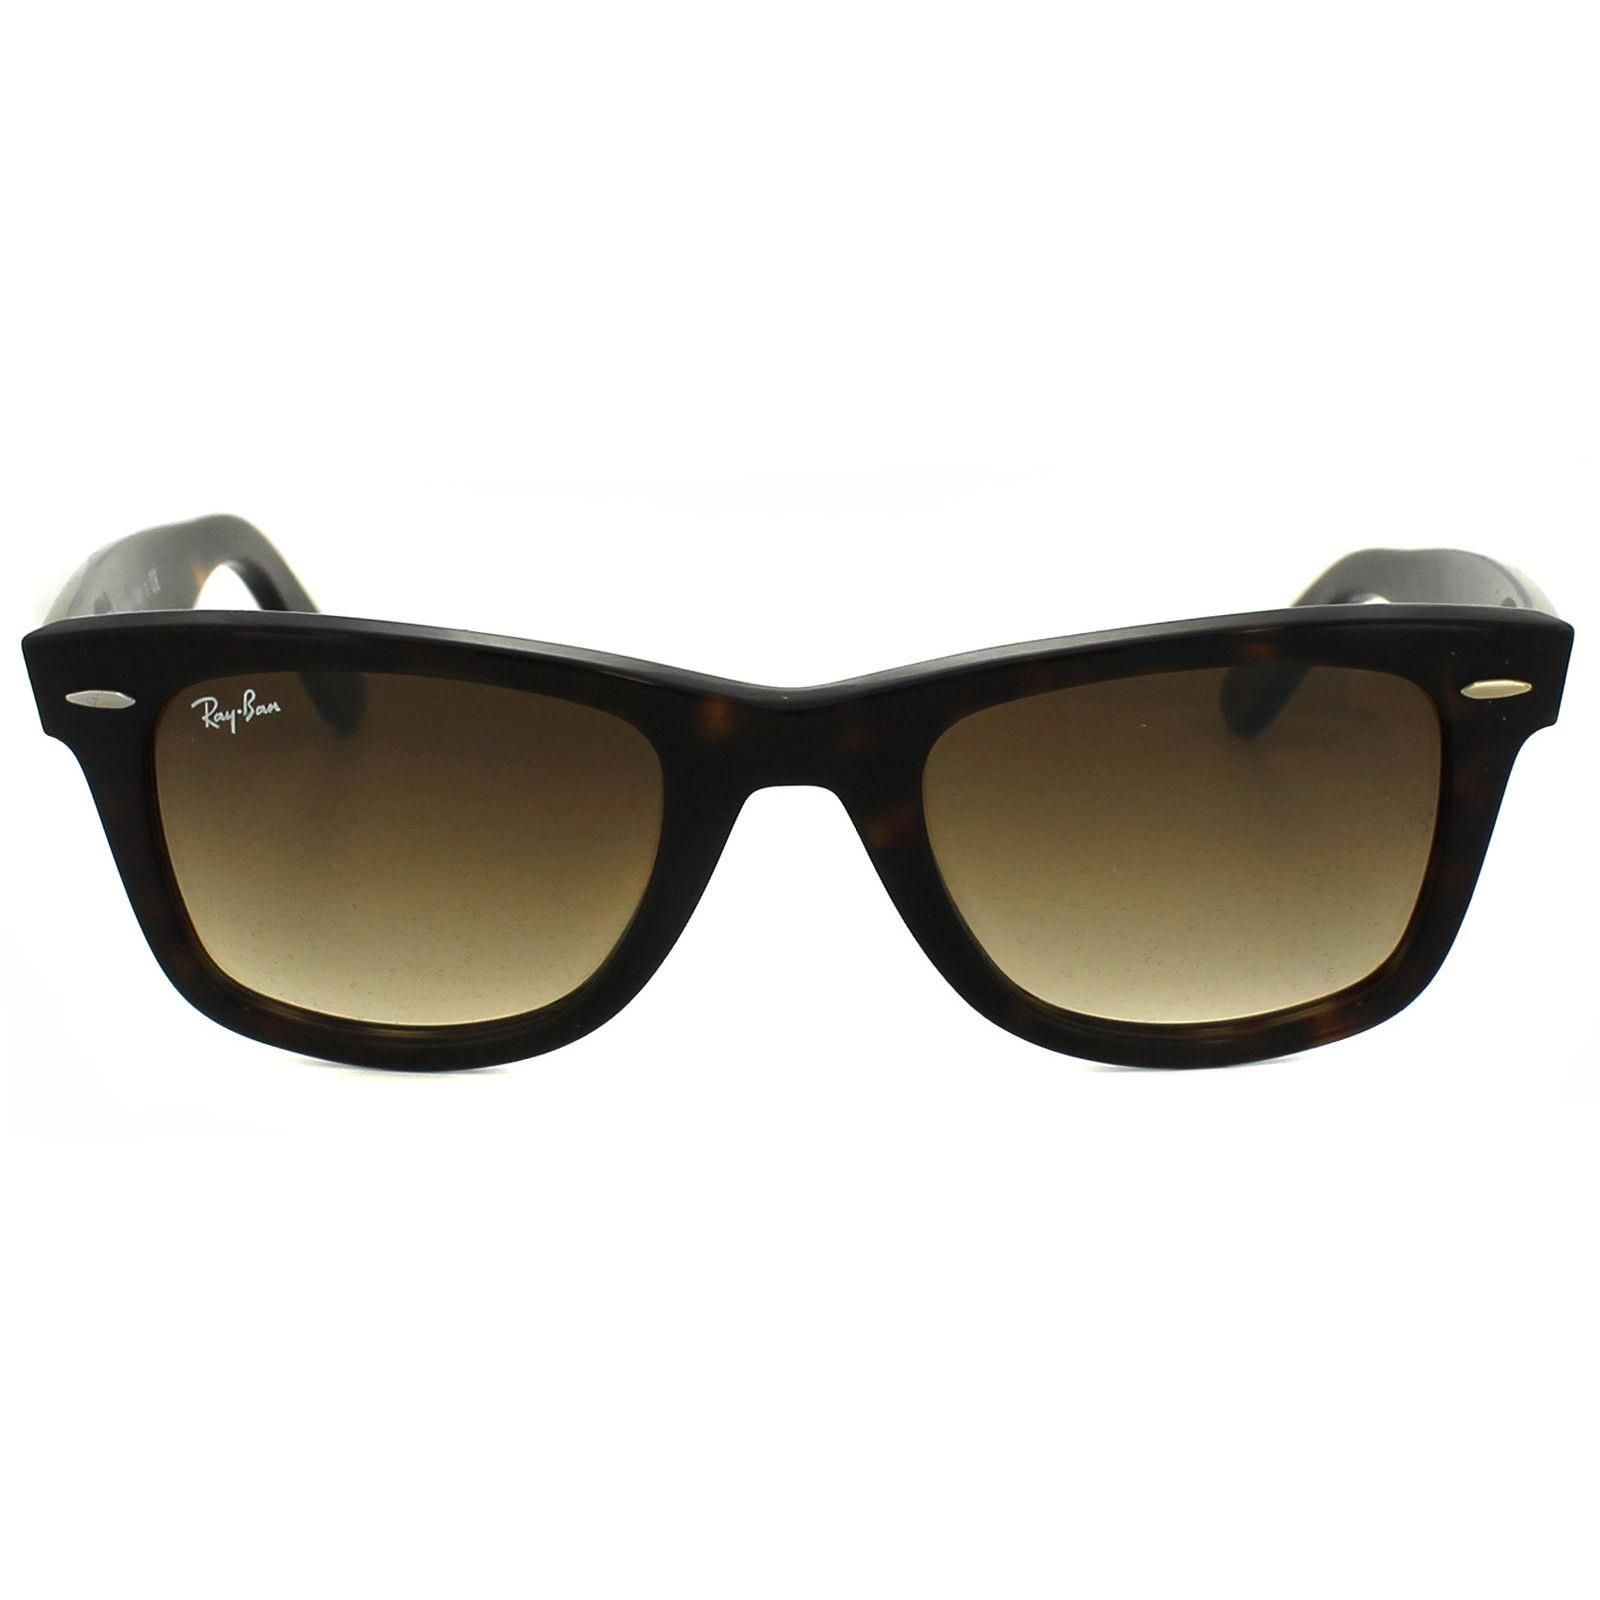 Ray-Ban Sunglasses Wayfarer 2140 902/51 Havana Brown Gradient Medium 50mm